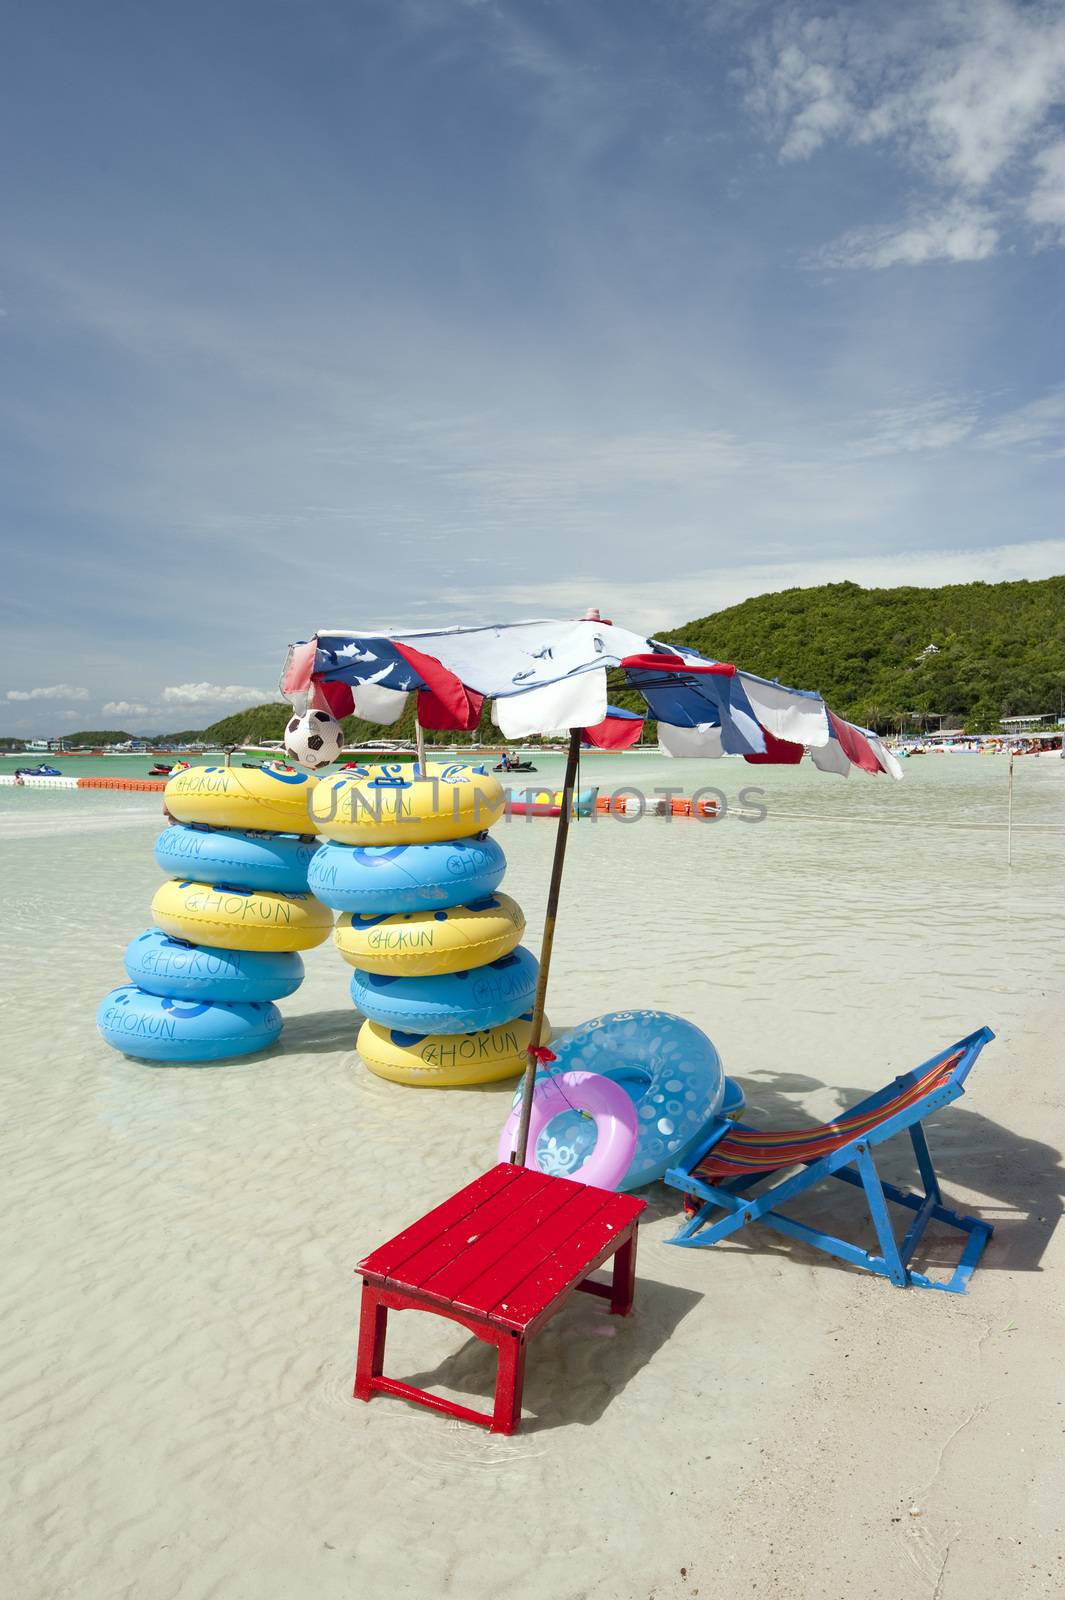 Beach chair and umbrella on the beach , Koh larn , Thailand by think4photop